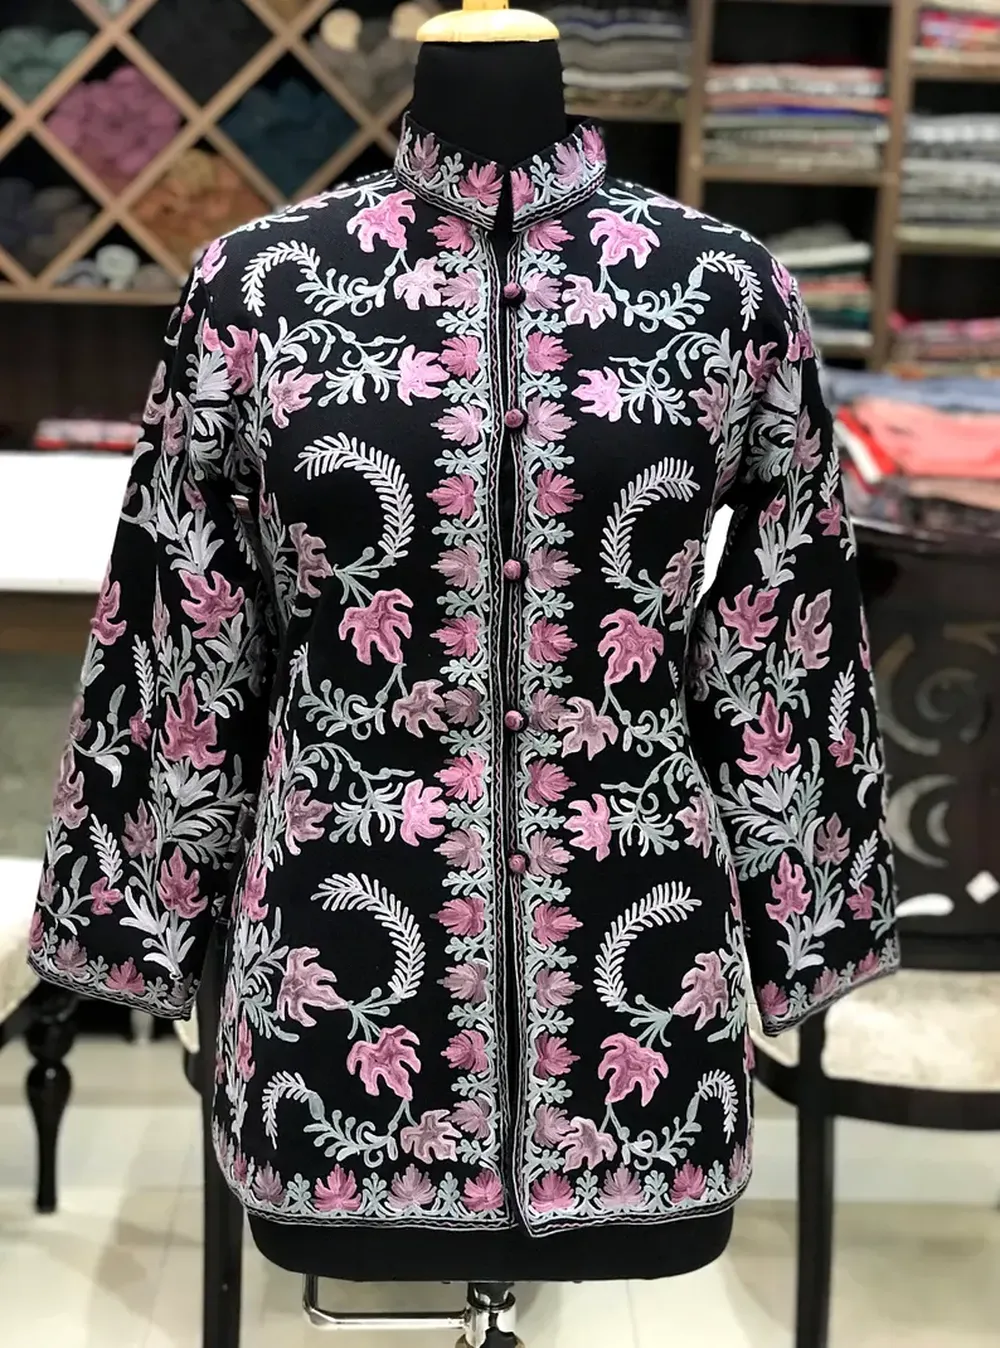 Black Woollen Jacket with Kashmir Aari Embroidery